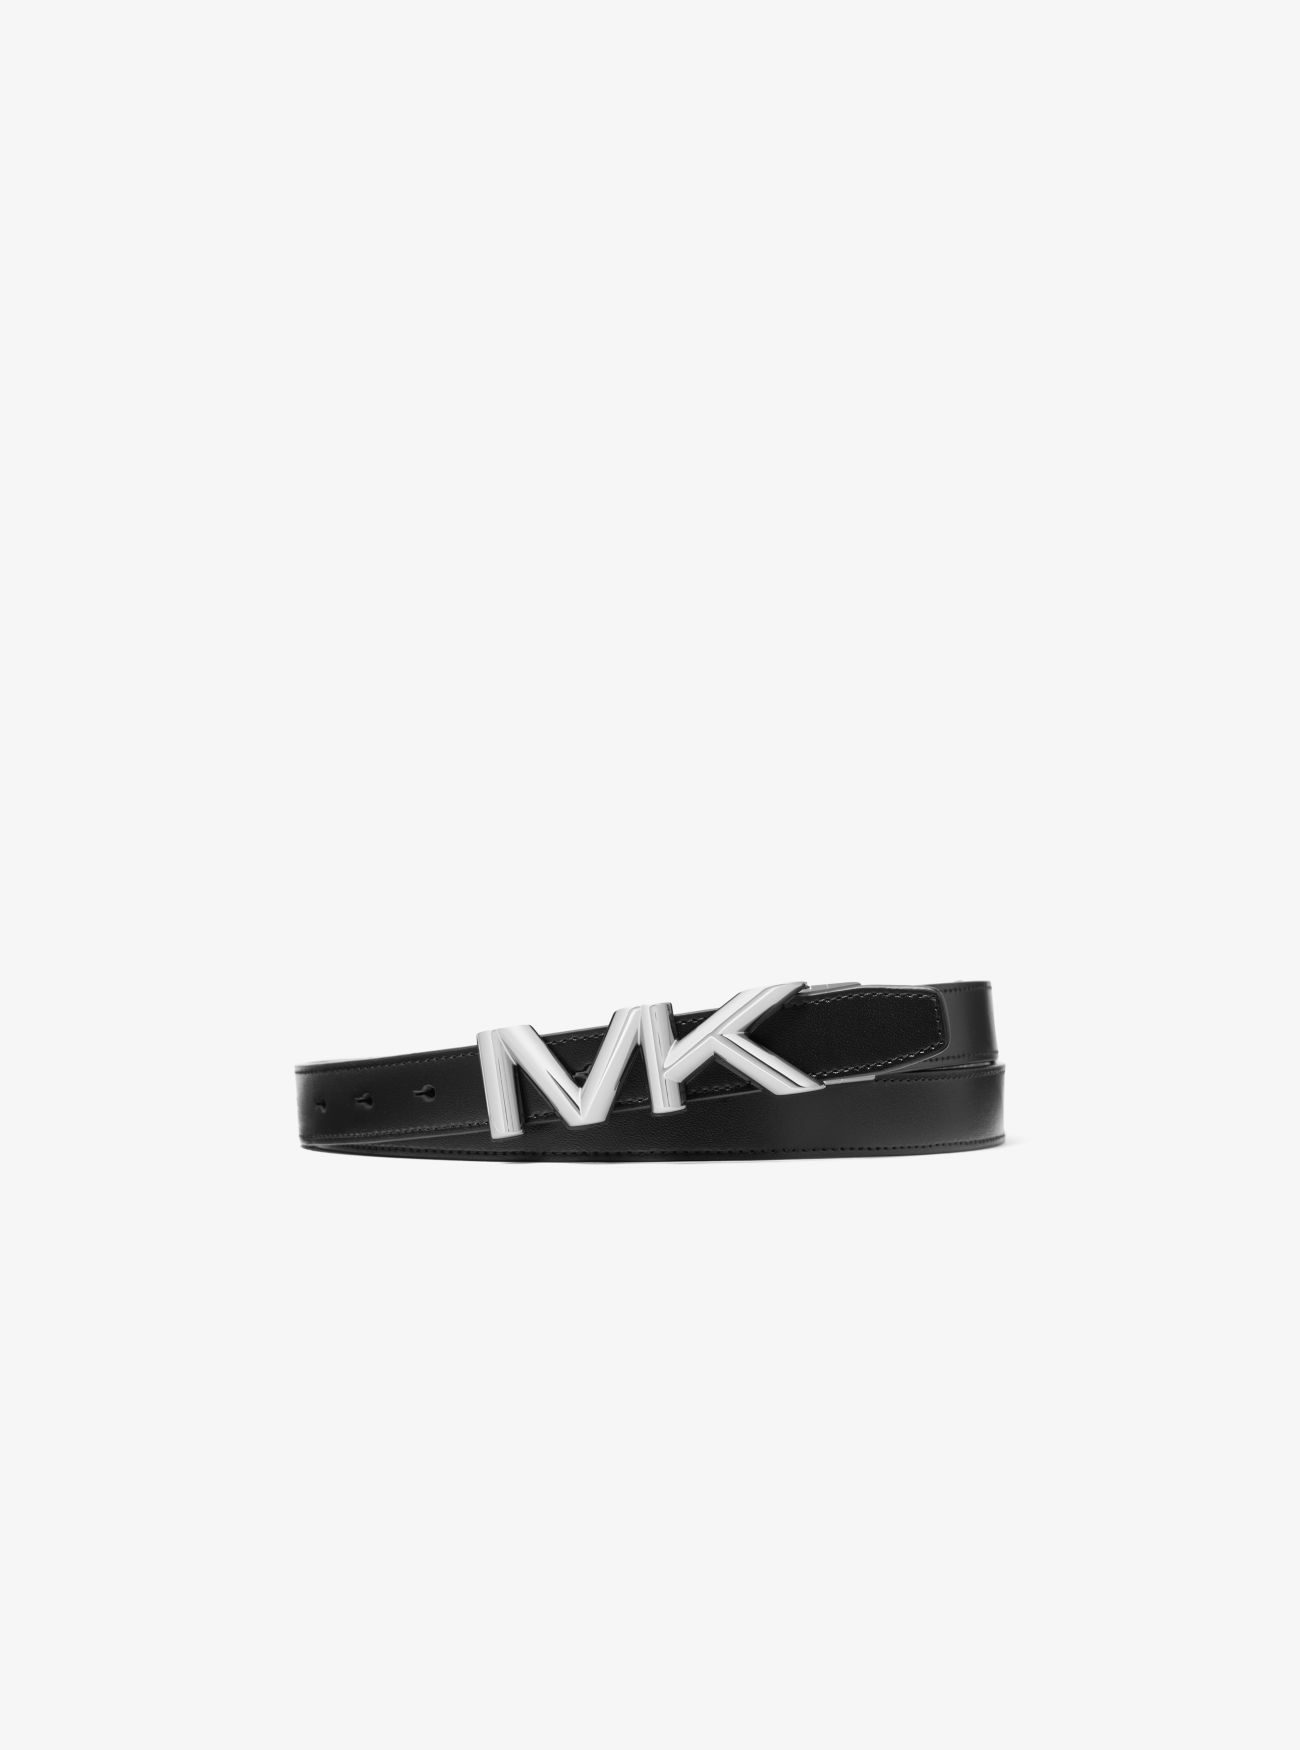 MK Reversible Leather Belt - Black - Michael Kors